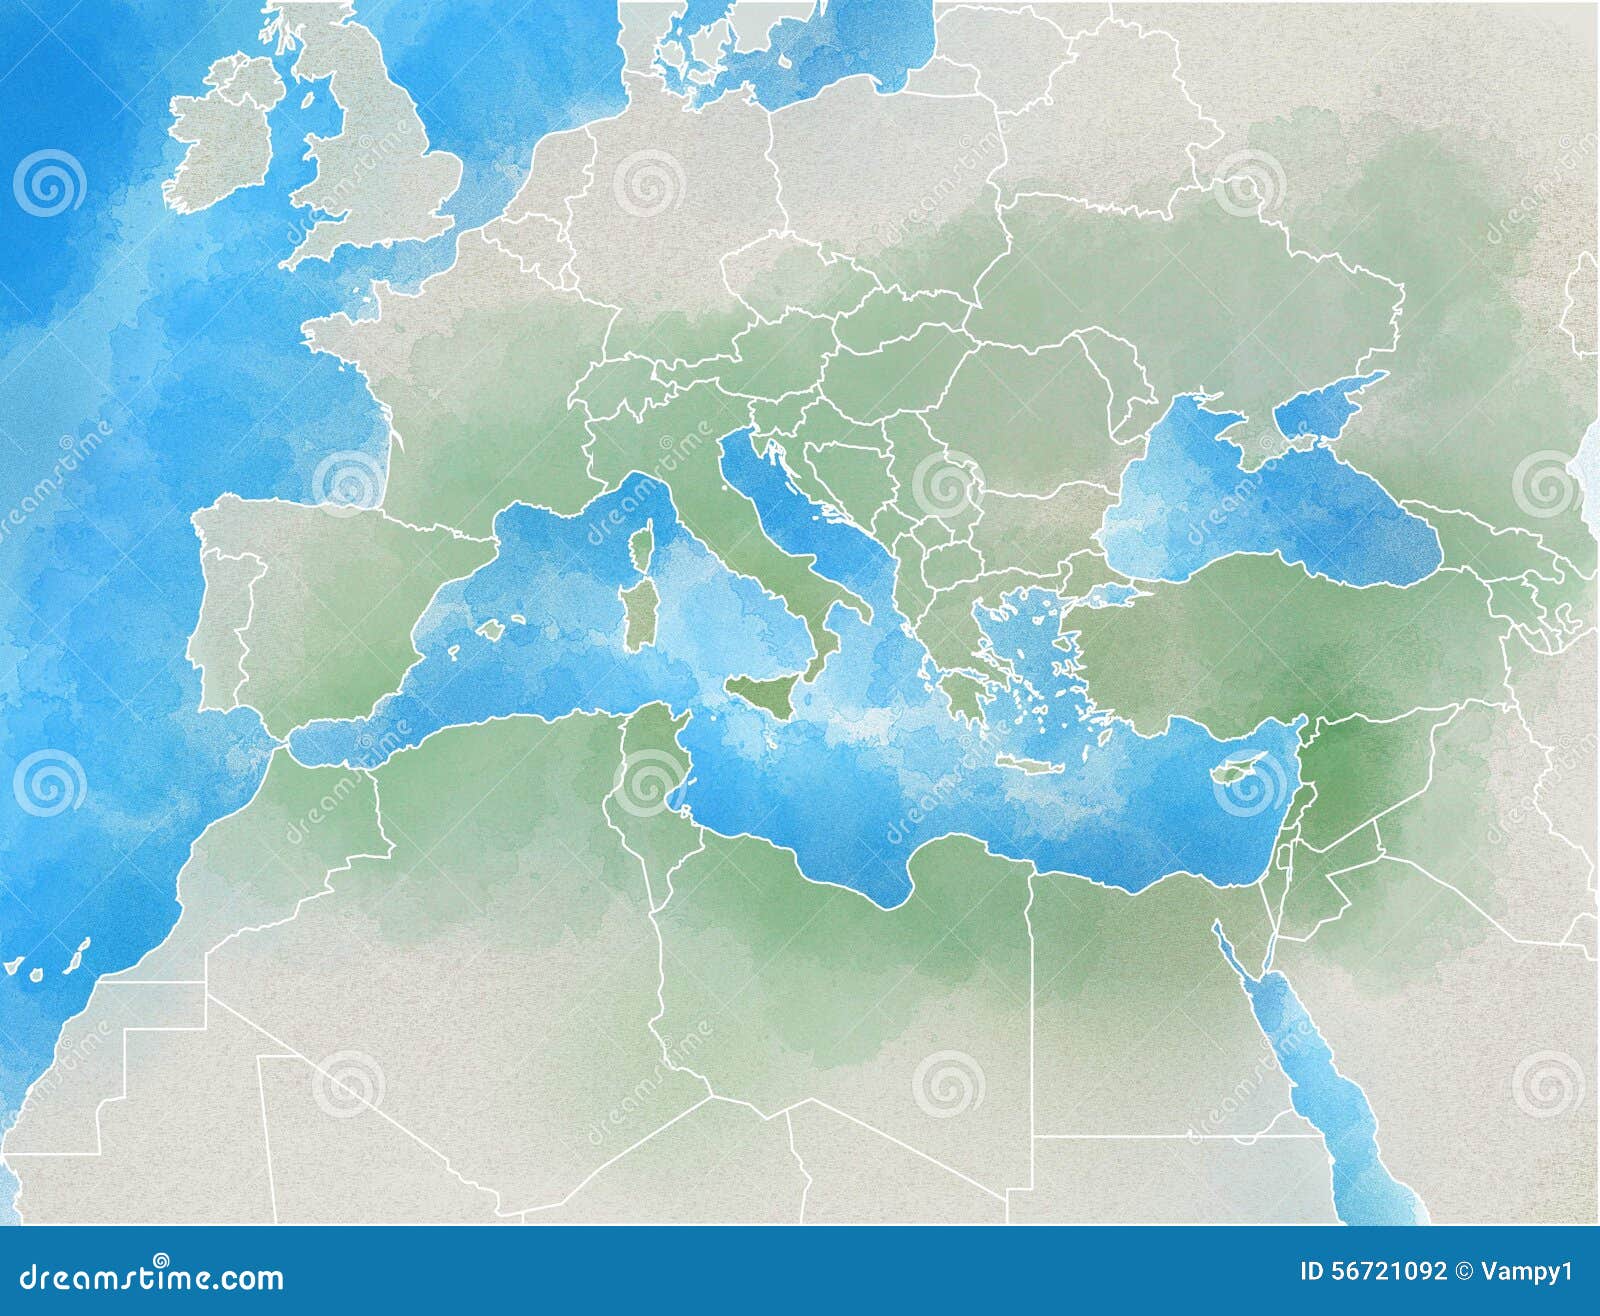 mediterranean map, illustrated